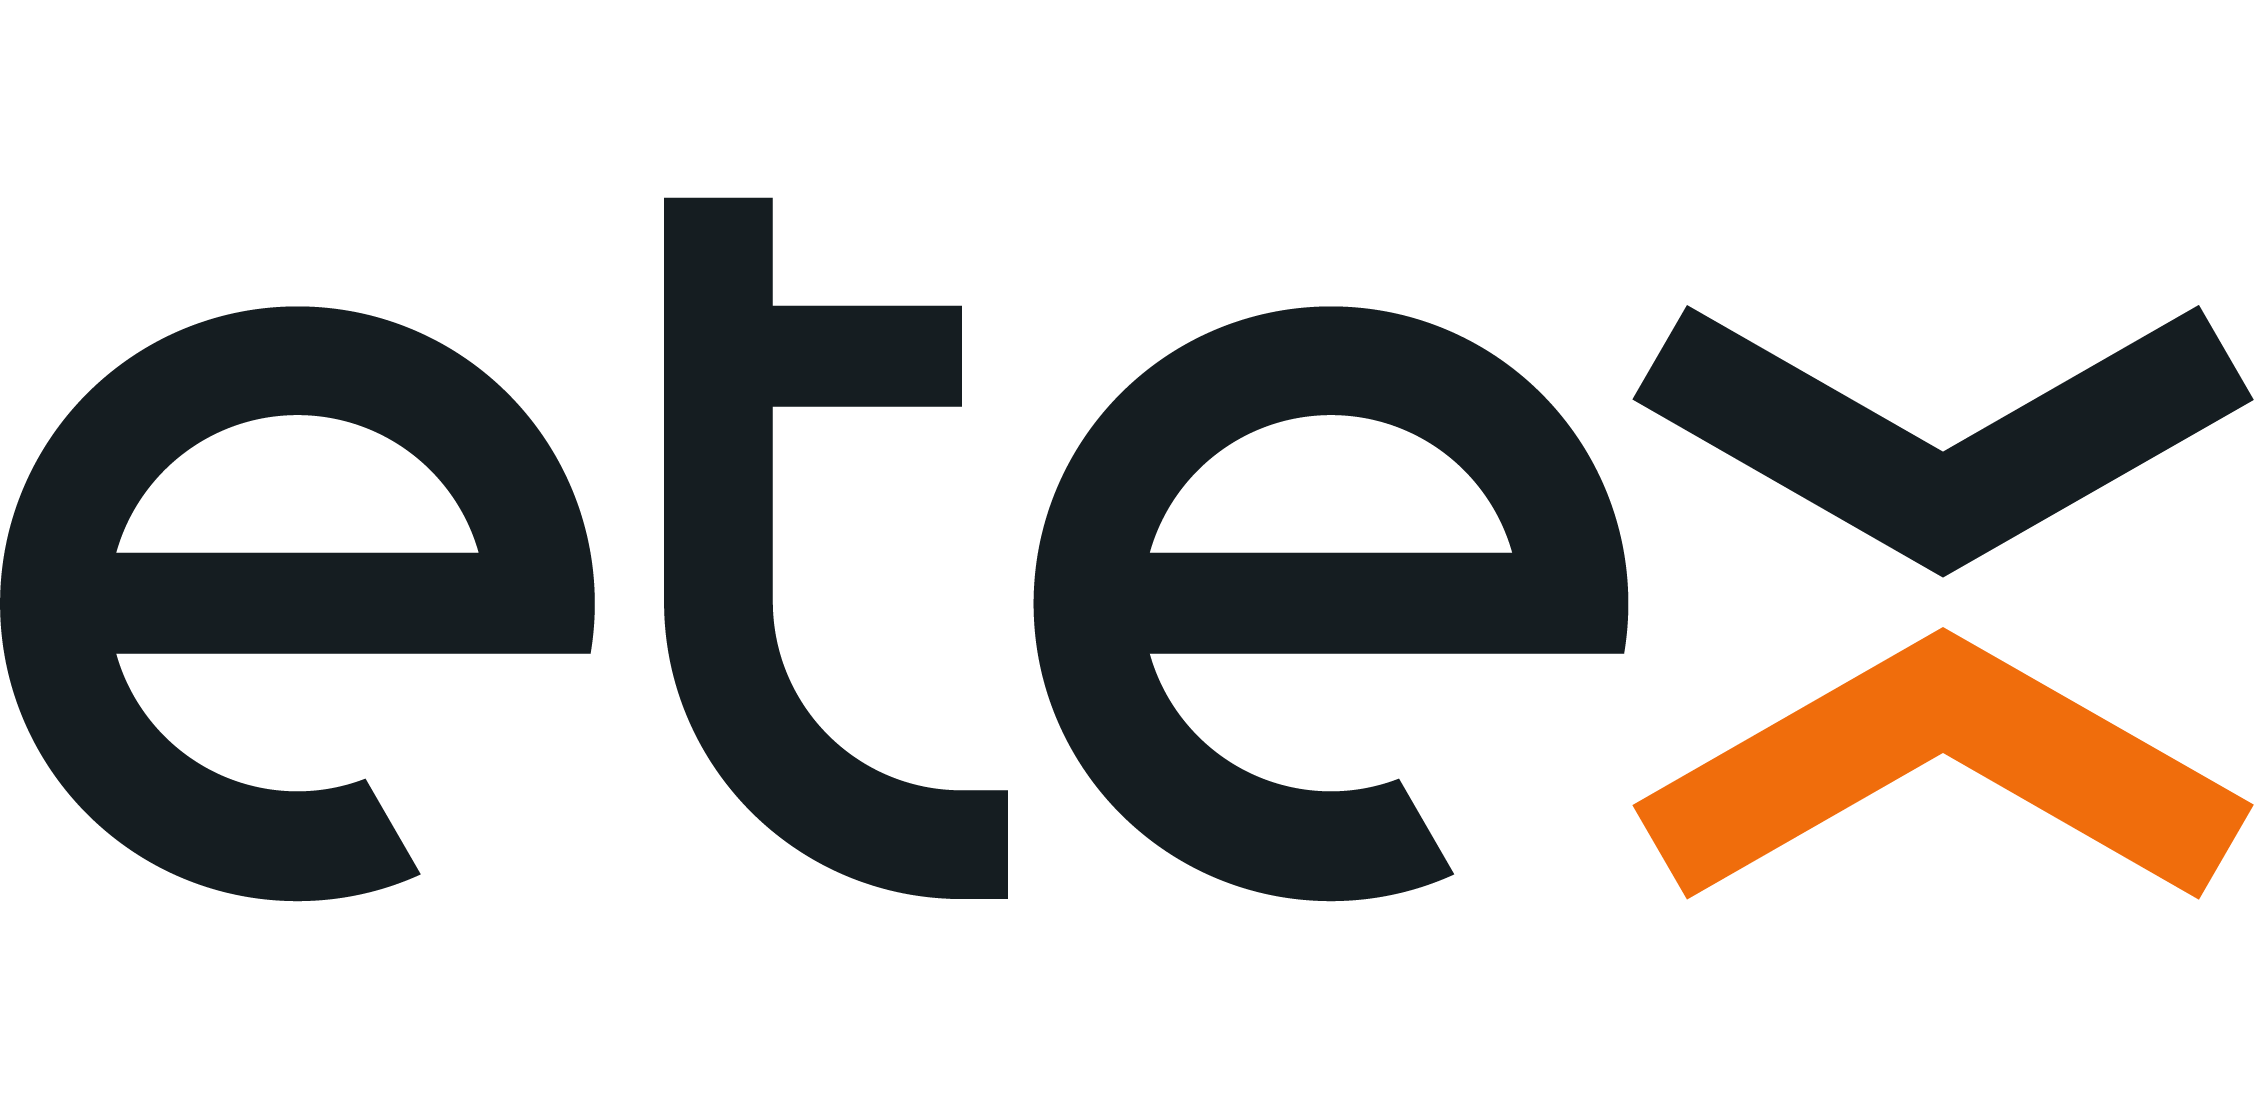 etex-logo-r2